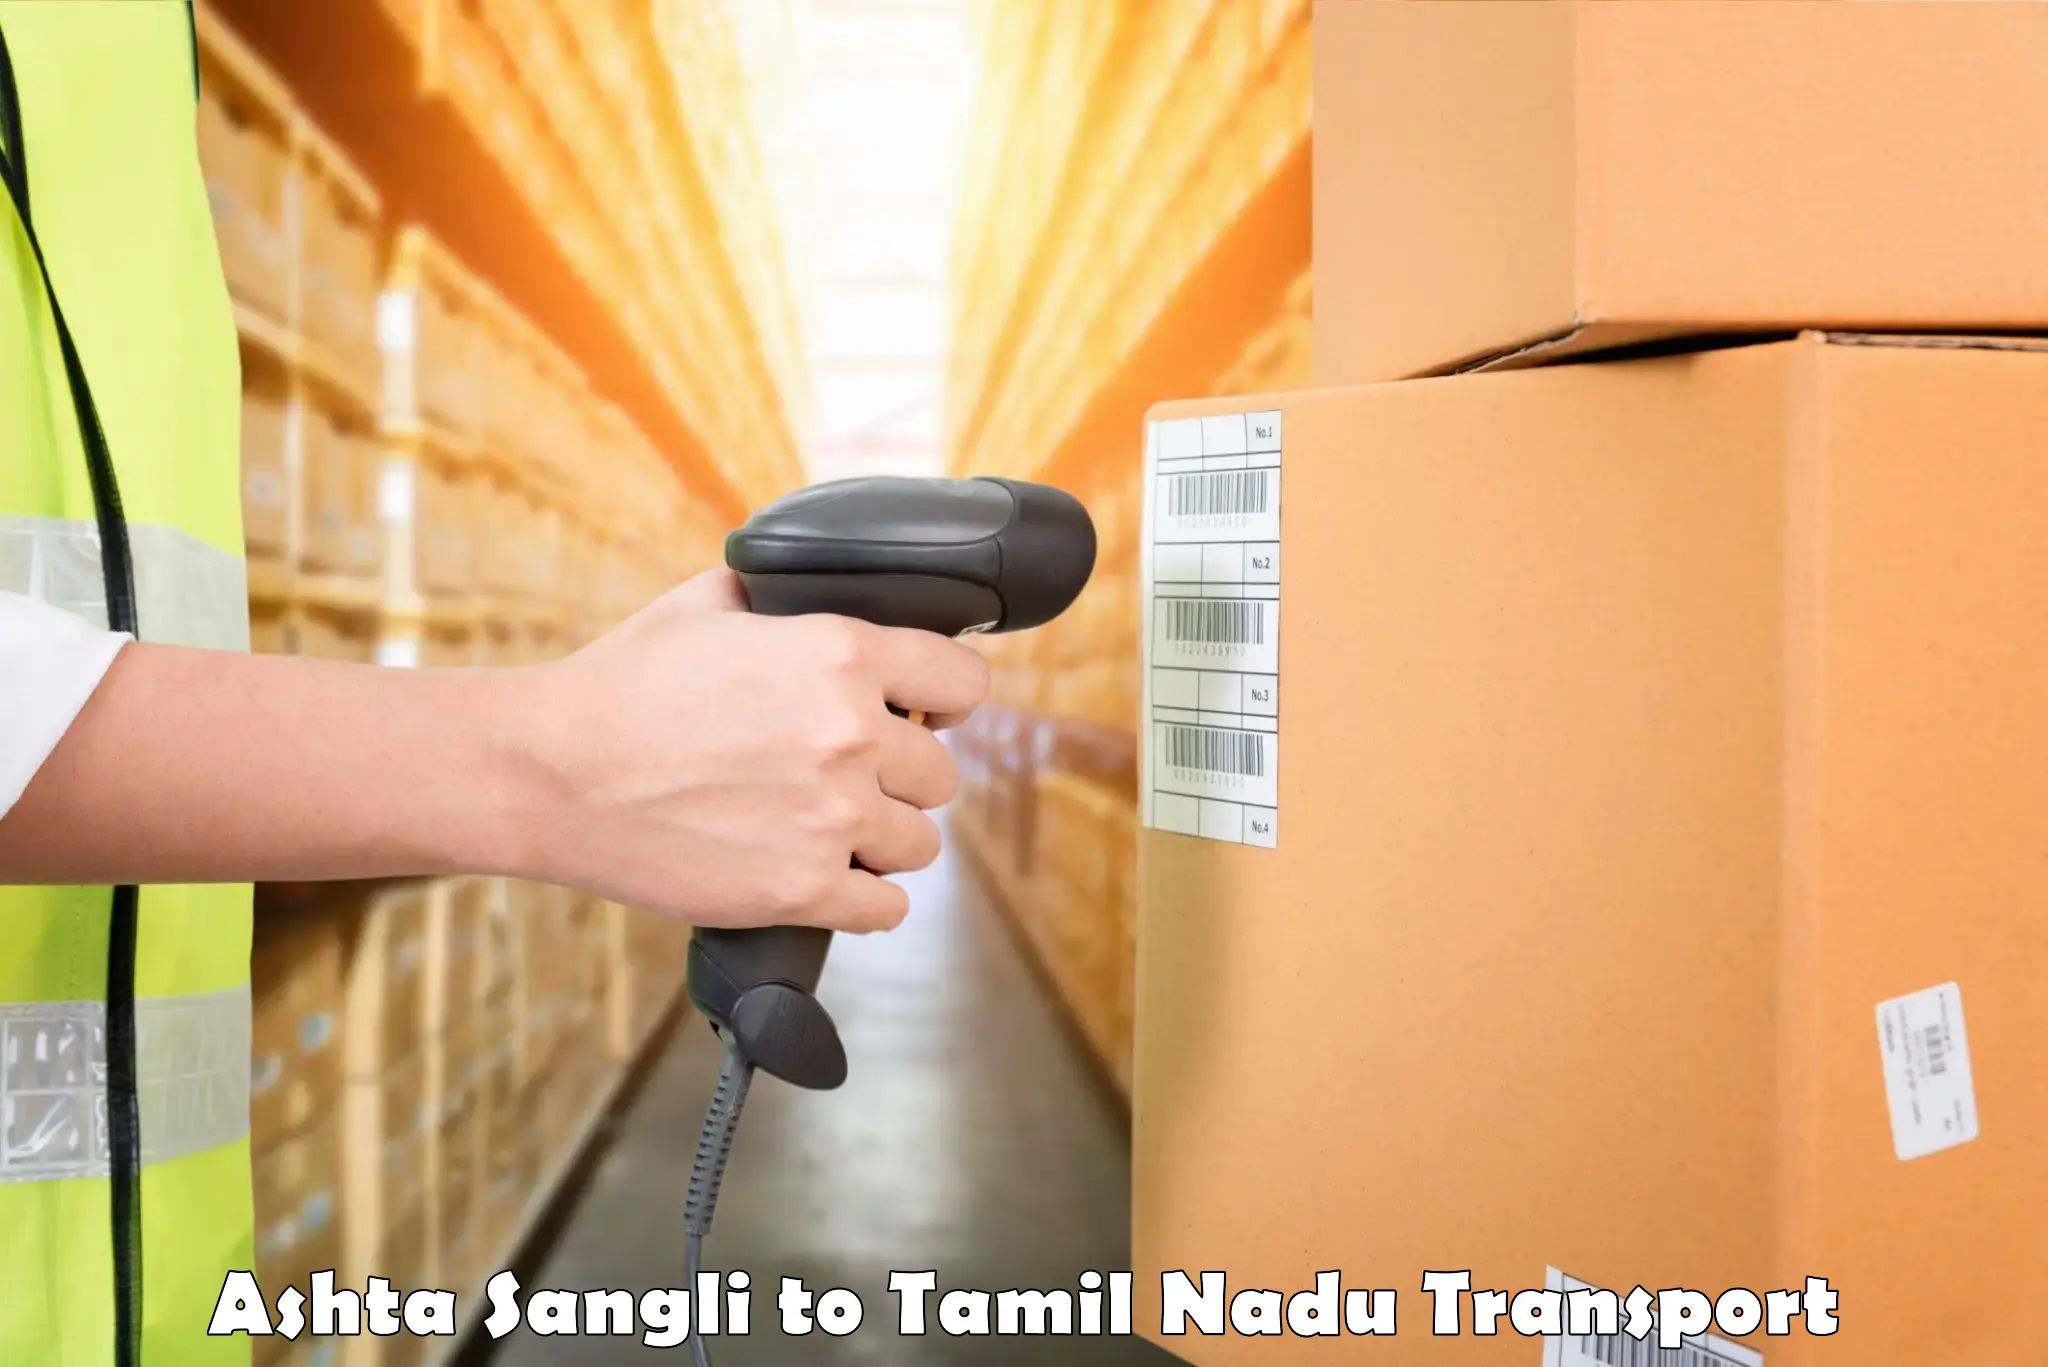 Furniture transport service Ashta Sangli to Tamil Nadu